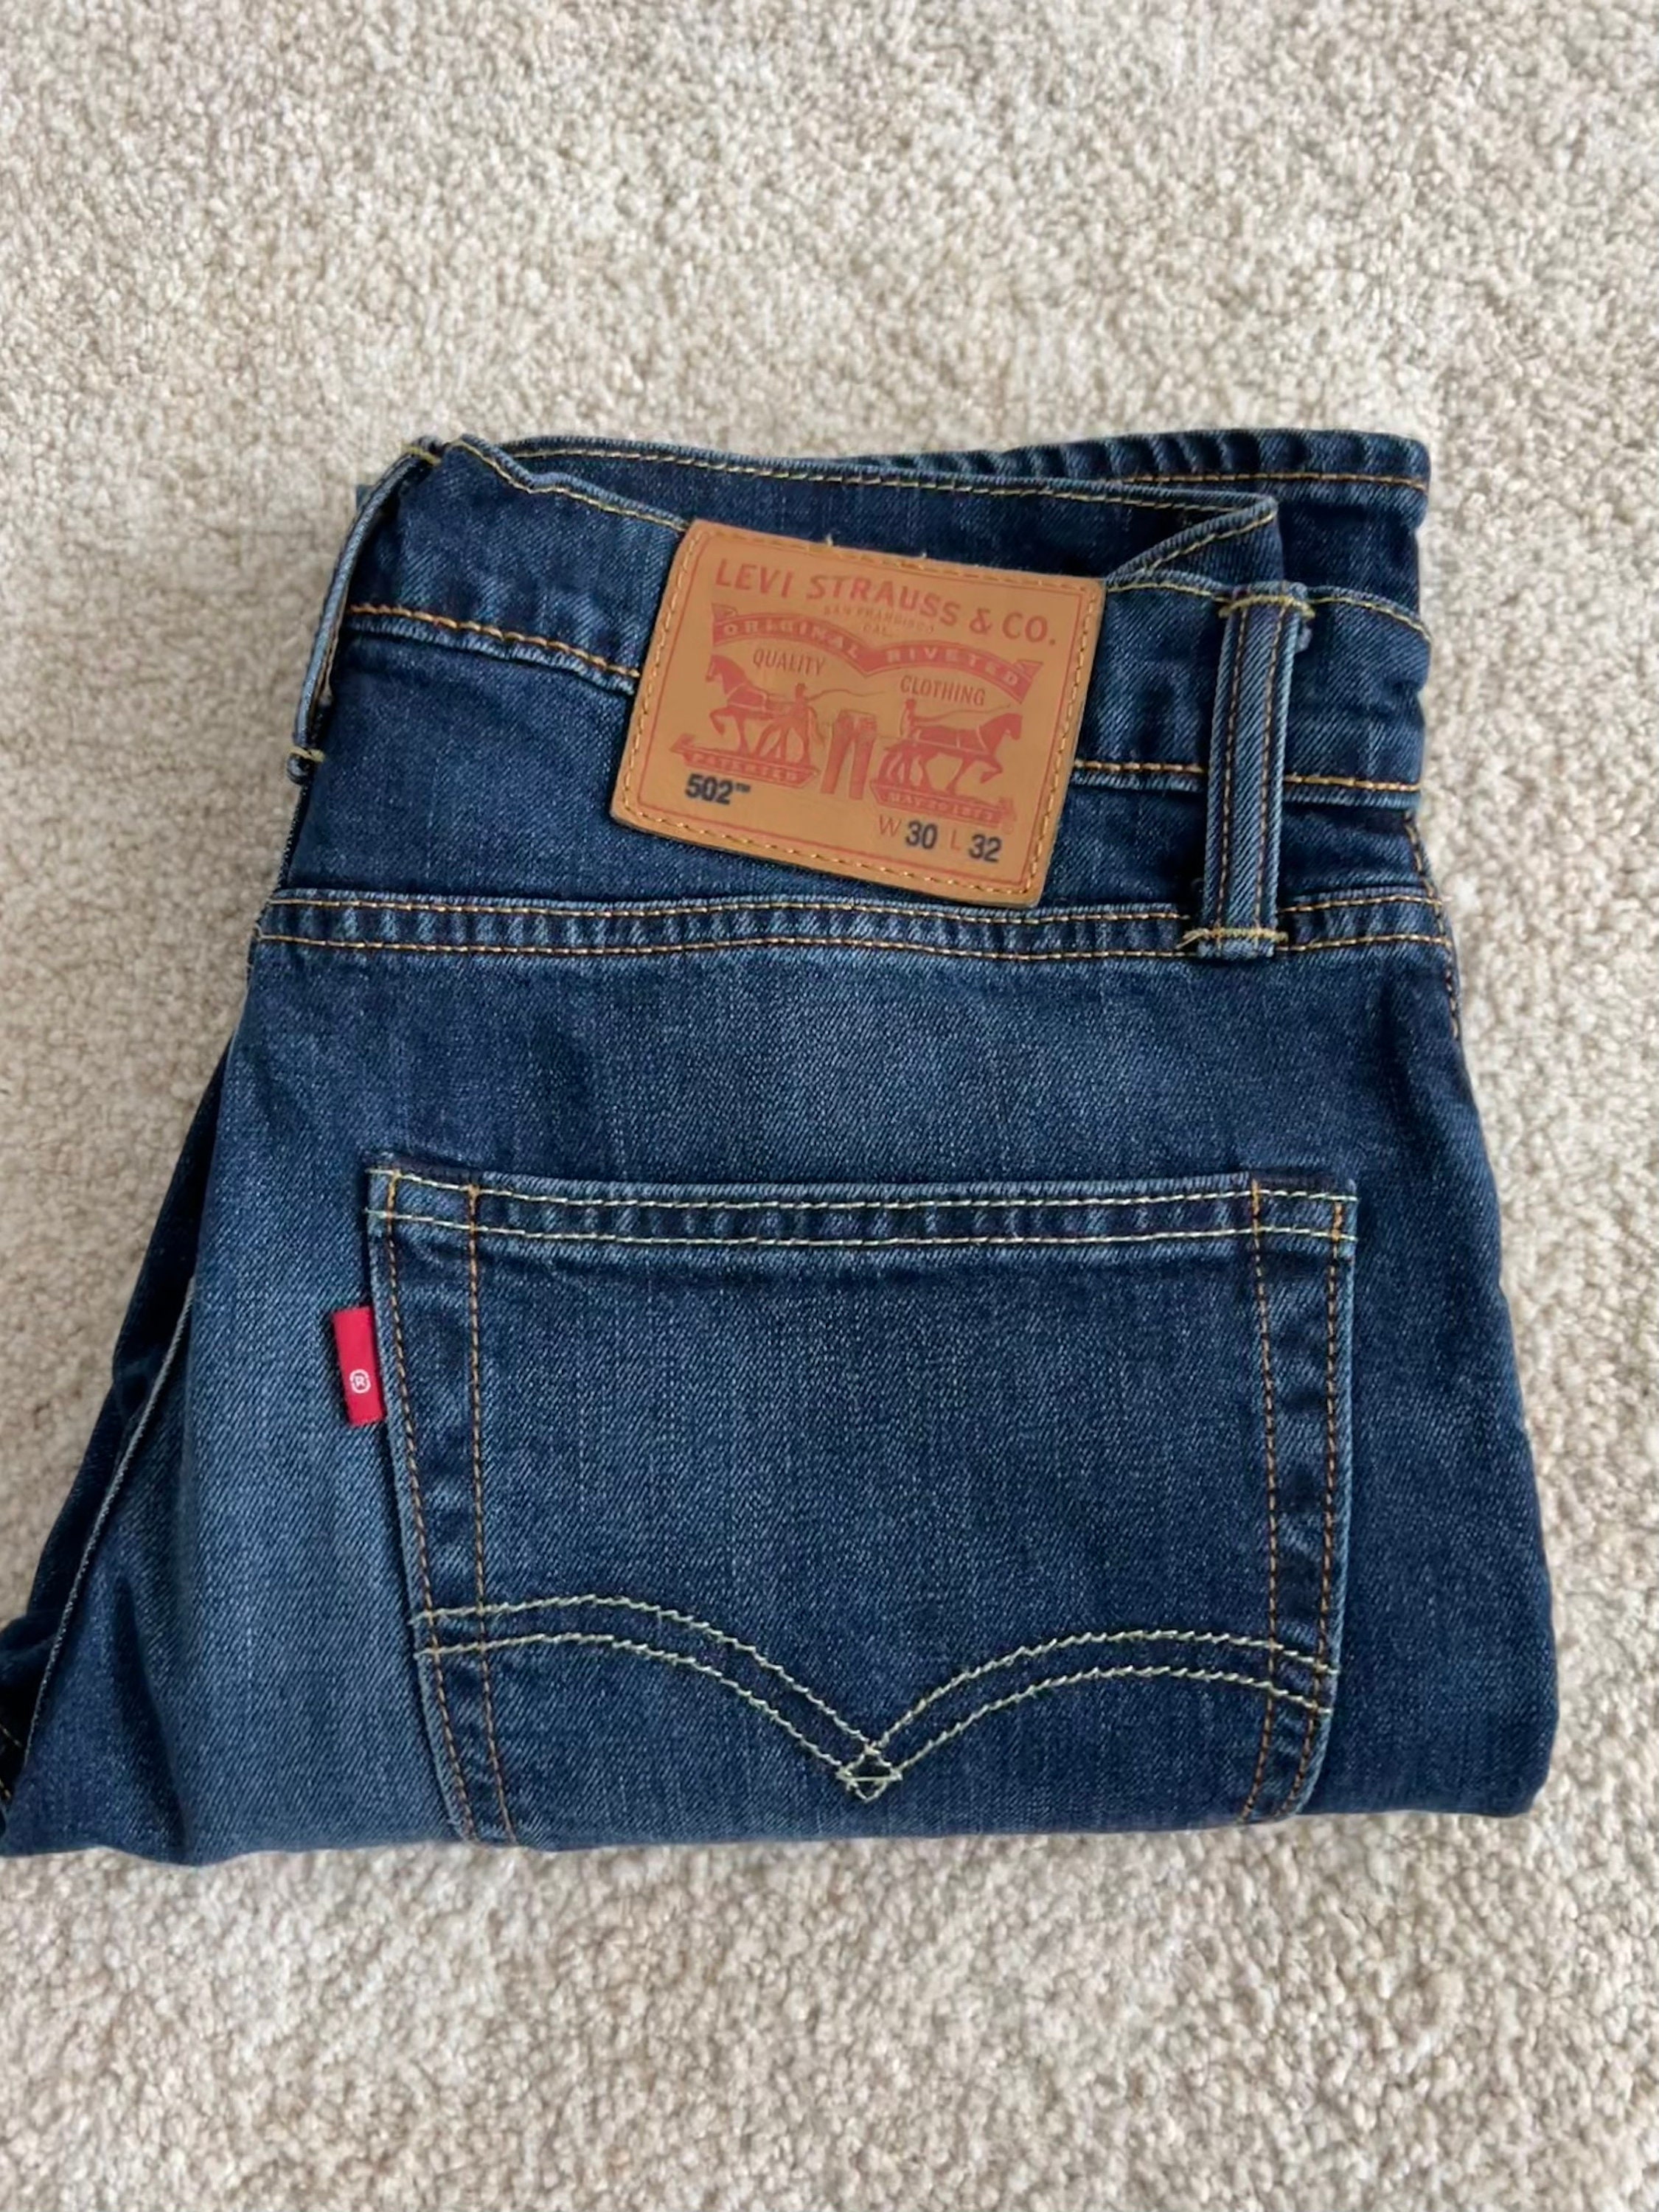 LEVIS 502 W30 Jeans Vintage Dark Blue Zip up Pants for Men L32 - Etsy New  Zealand